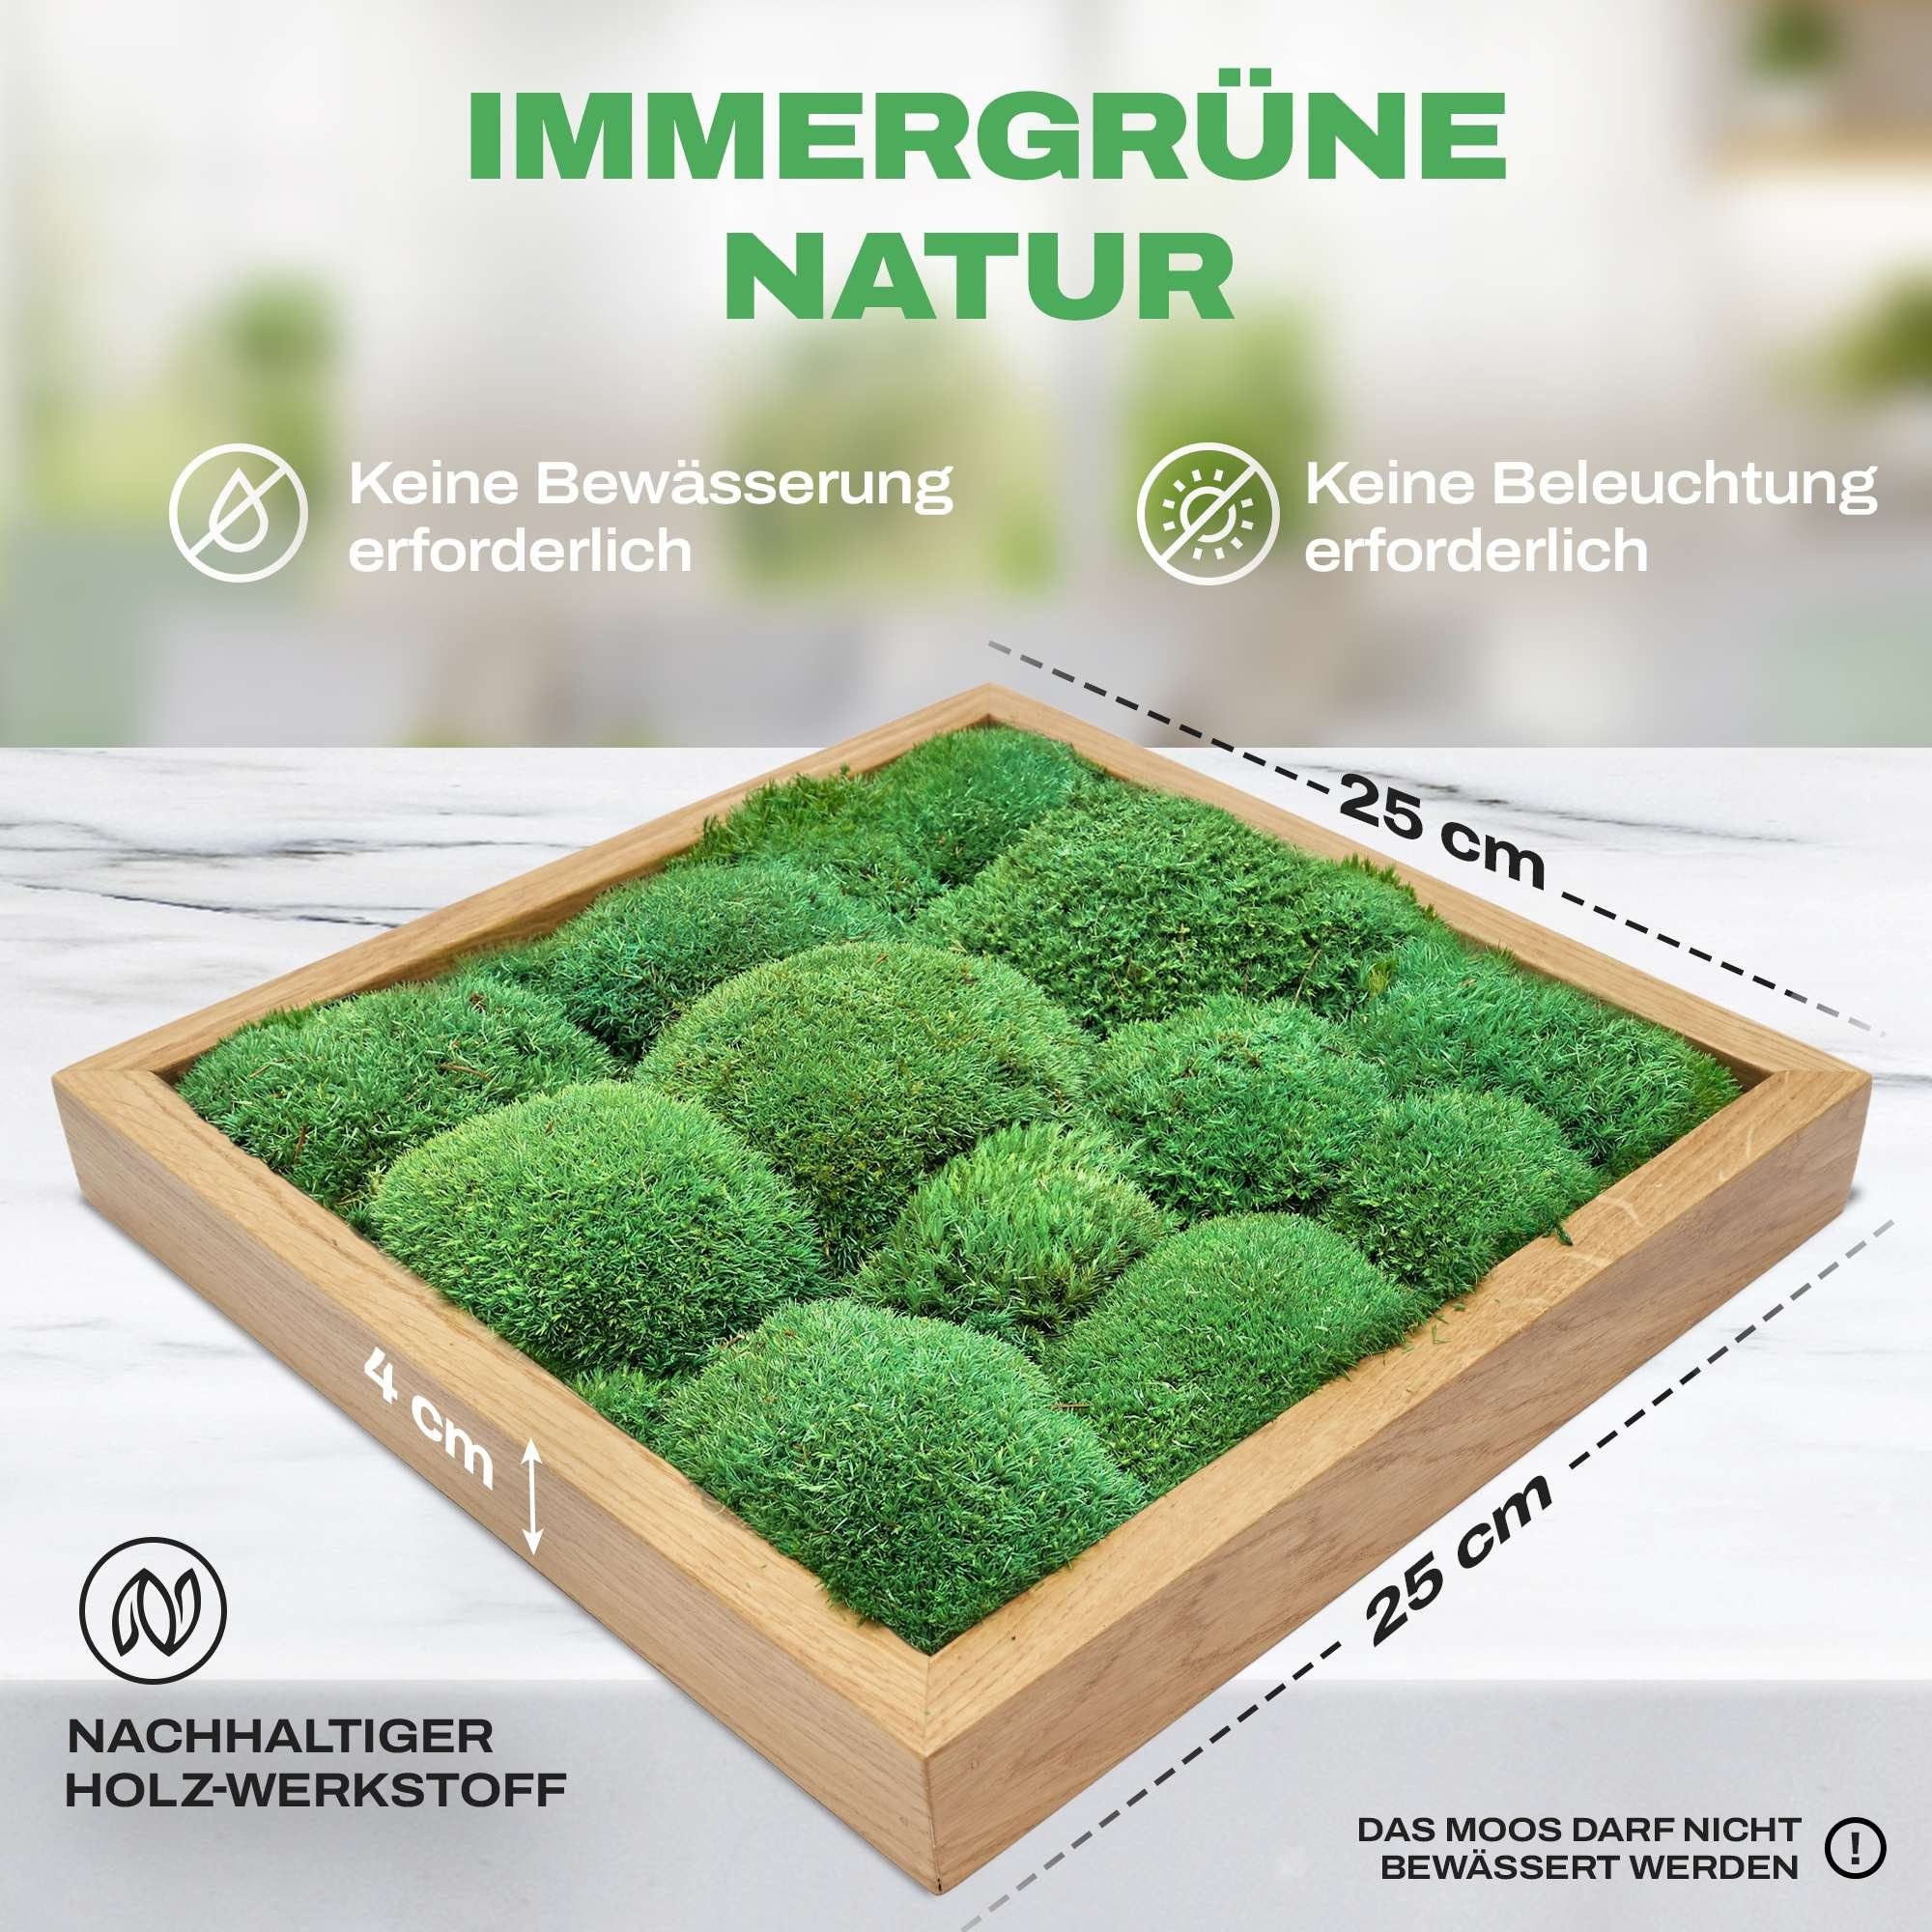 naturewalls Bild Moosbild Kugelmoos St), (geölt) Pflanzenbild - Vollholz-Rahmen - (1 Wandbild, Eiche konserviert